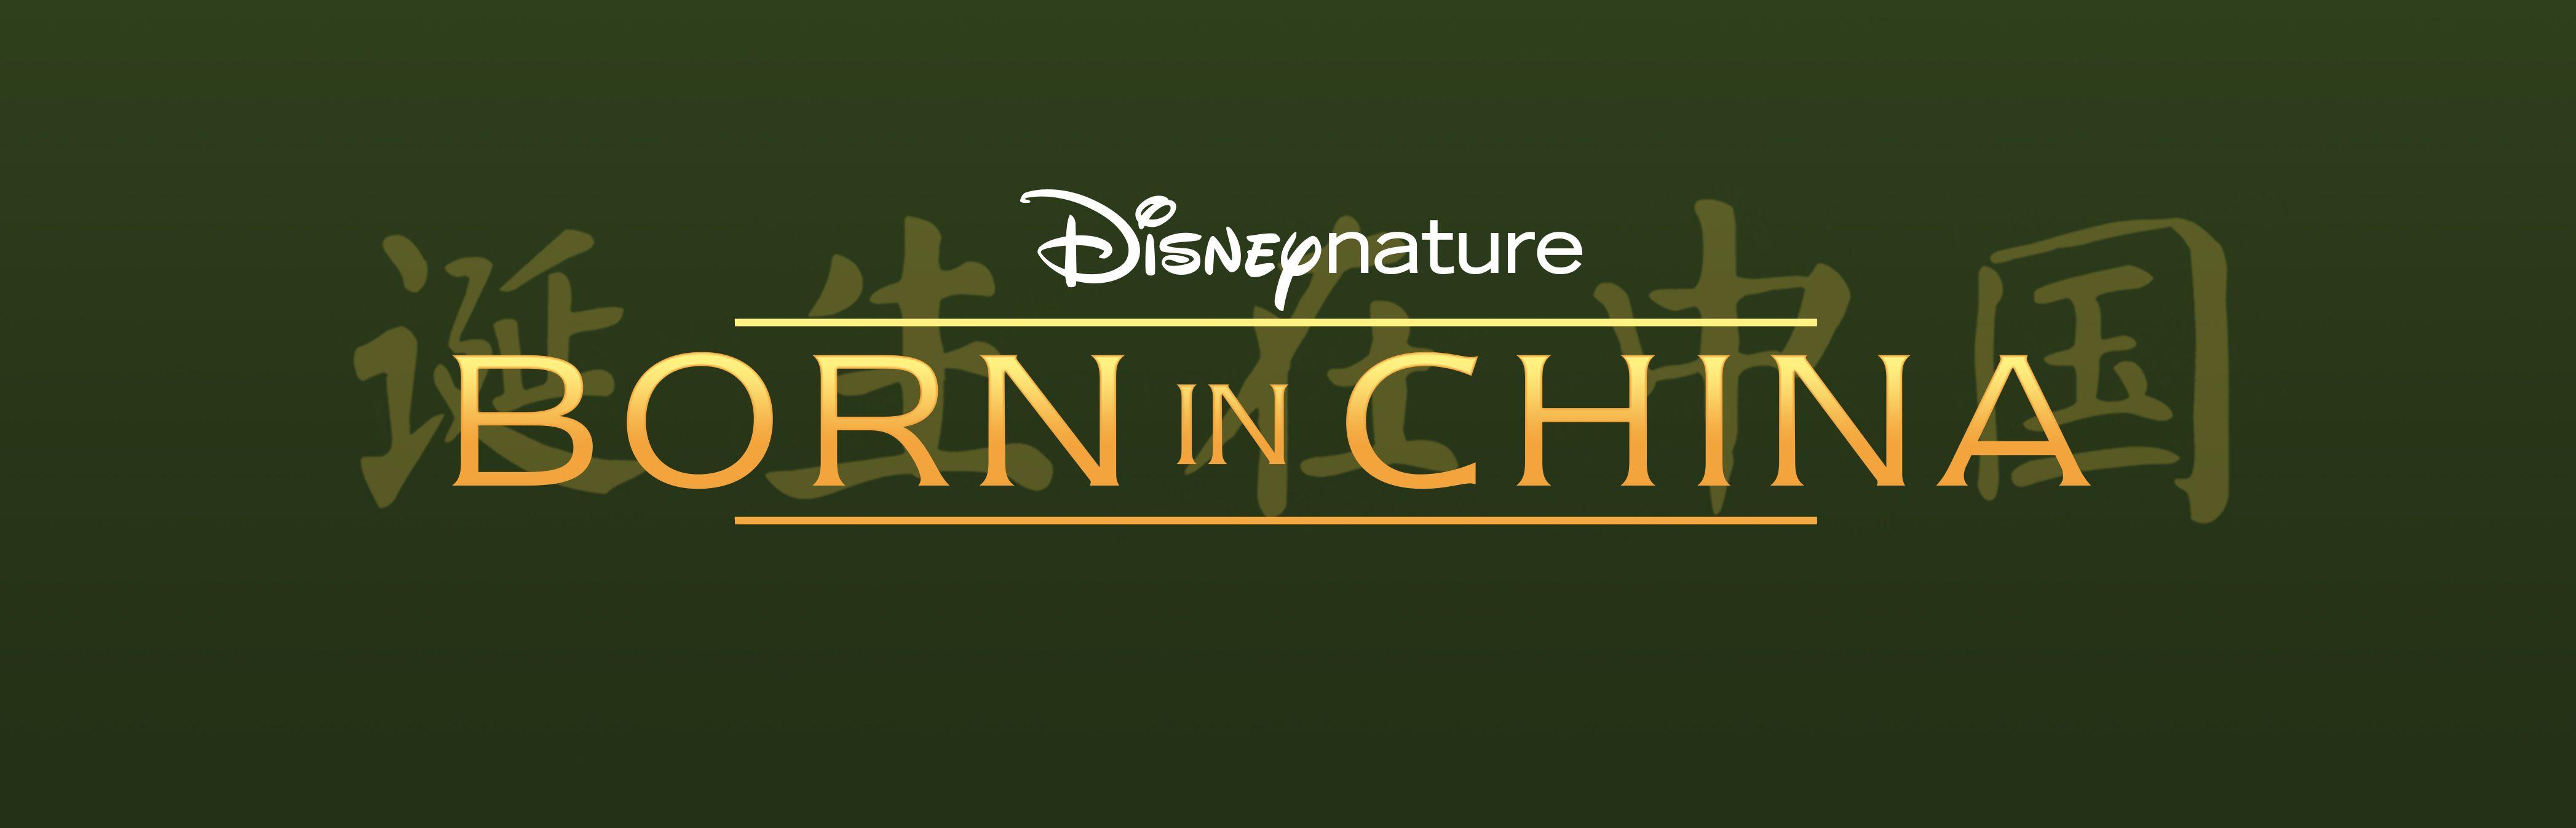 Disney Movie 2017 Logo - New Clips of DisneyNature BORN IN CHINA #BornInChina